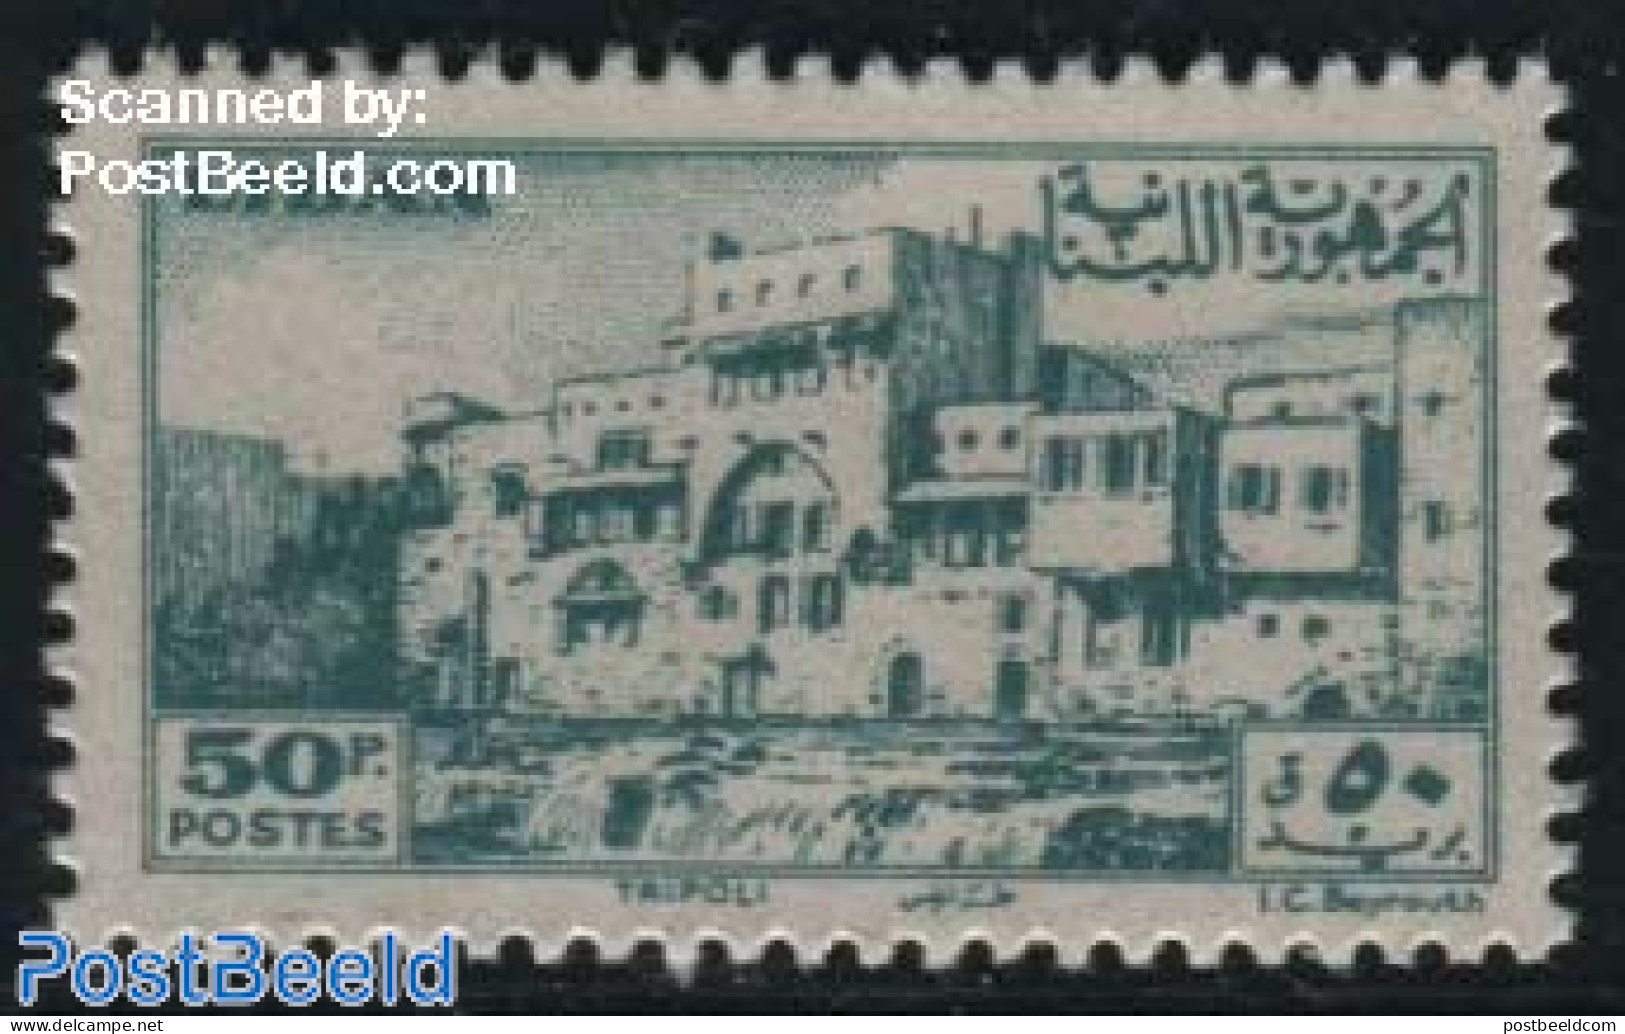 Lebanon 1947 50P, Stamp Out Of Set, Mint NH - Lebanon